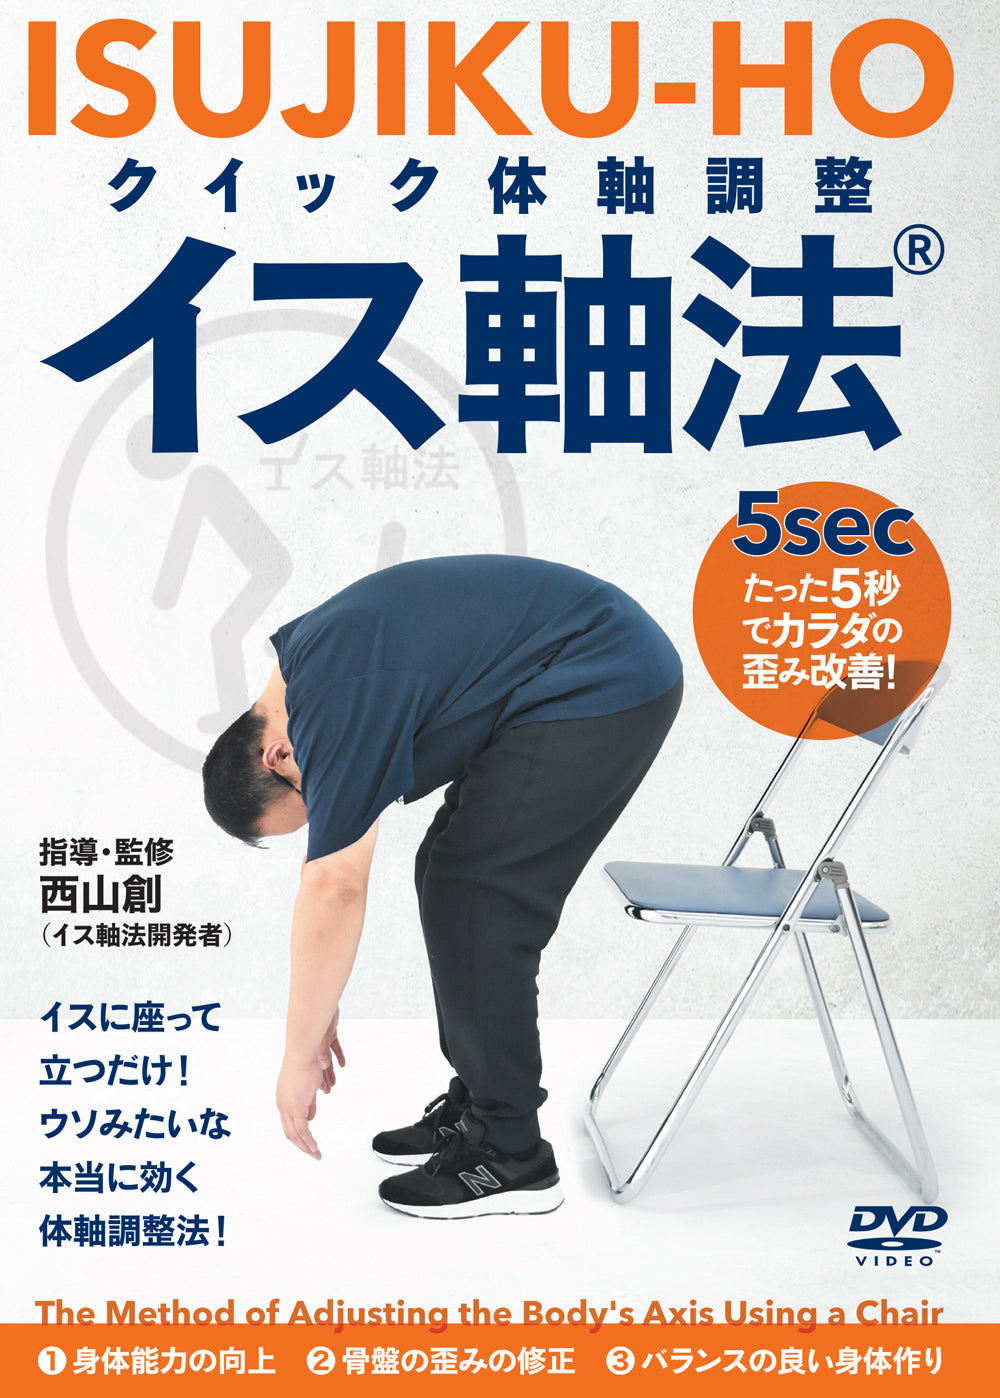 Isujiku-Ho: Method of Adjusting Body's Axis Using a Chair DVD by Hajime Nishiyama